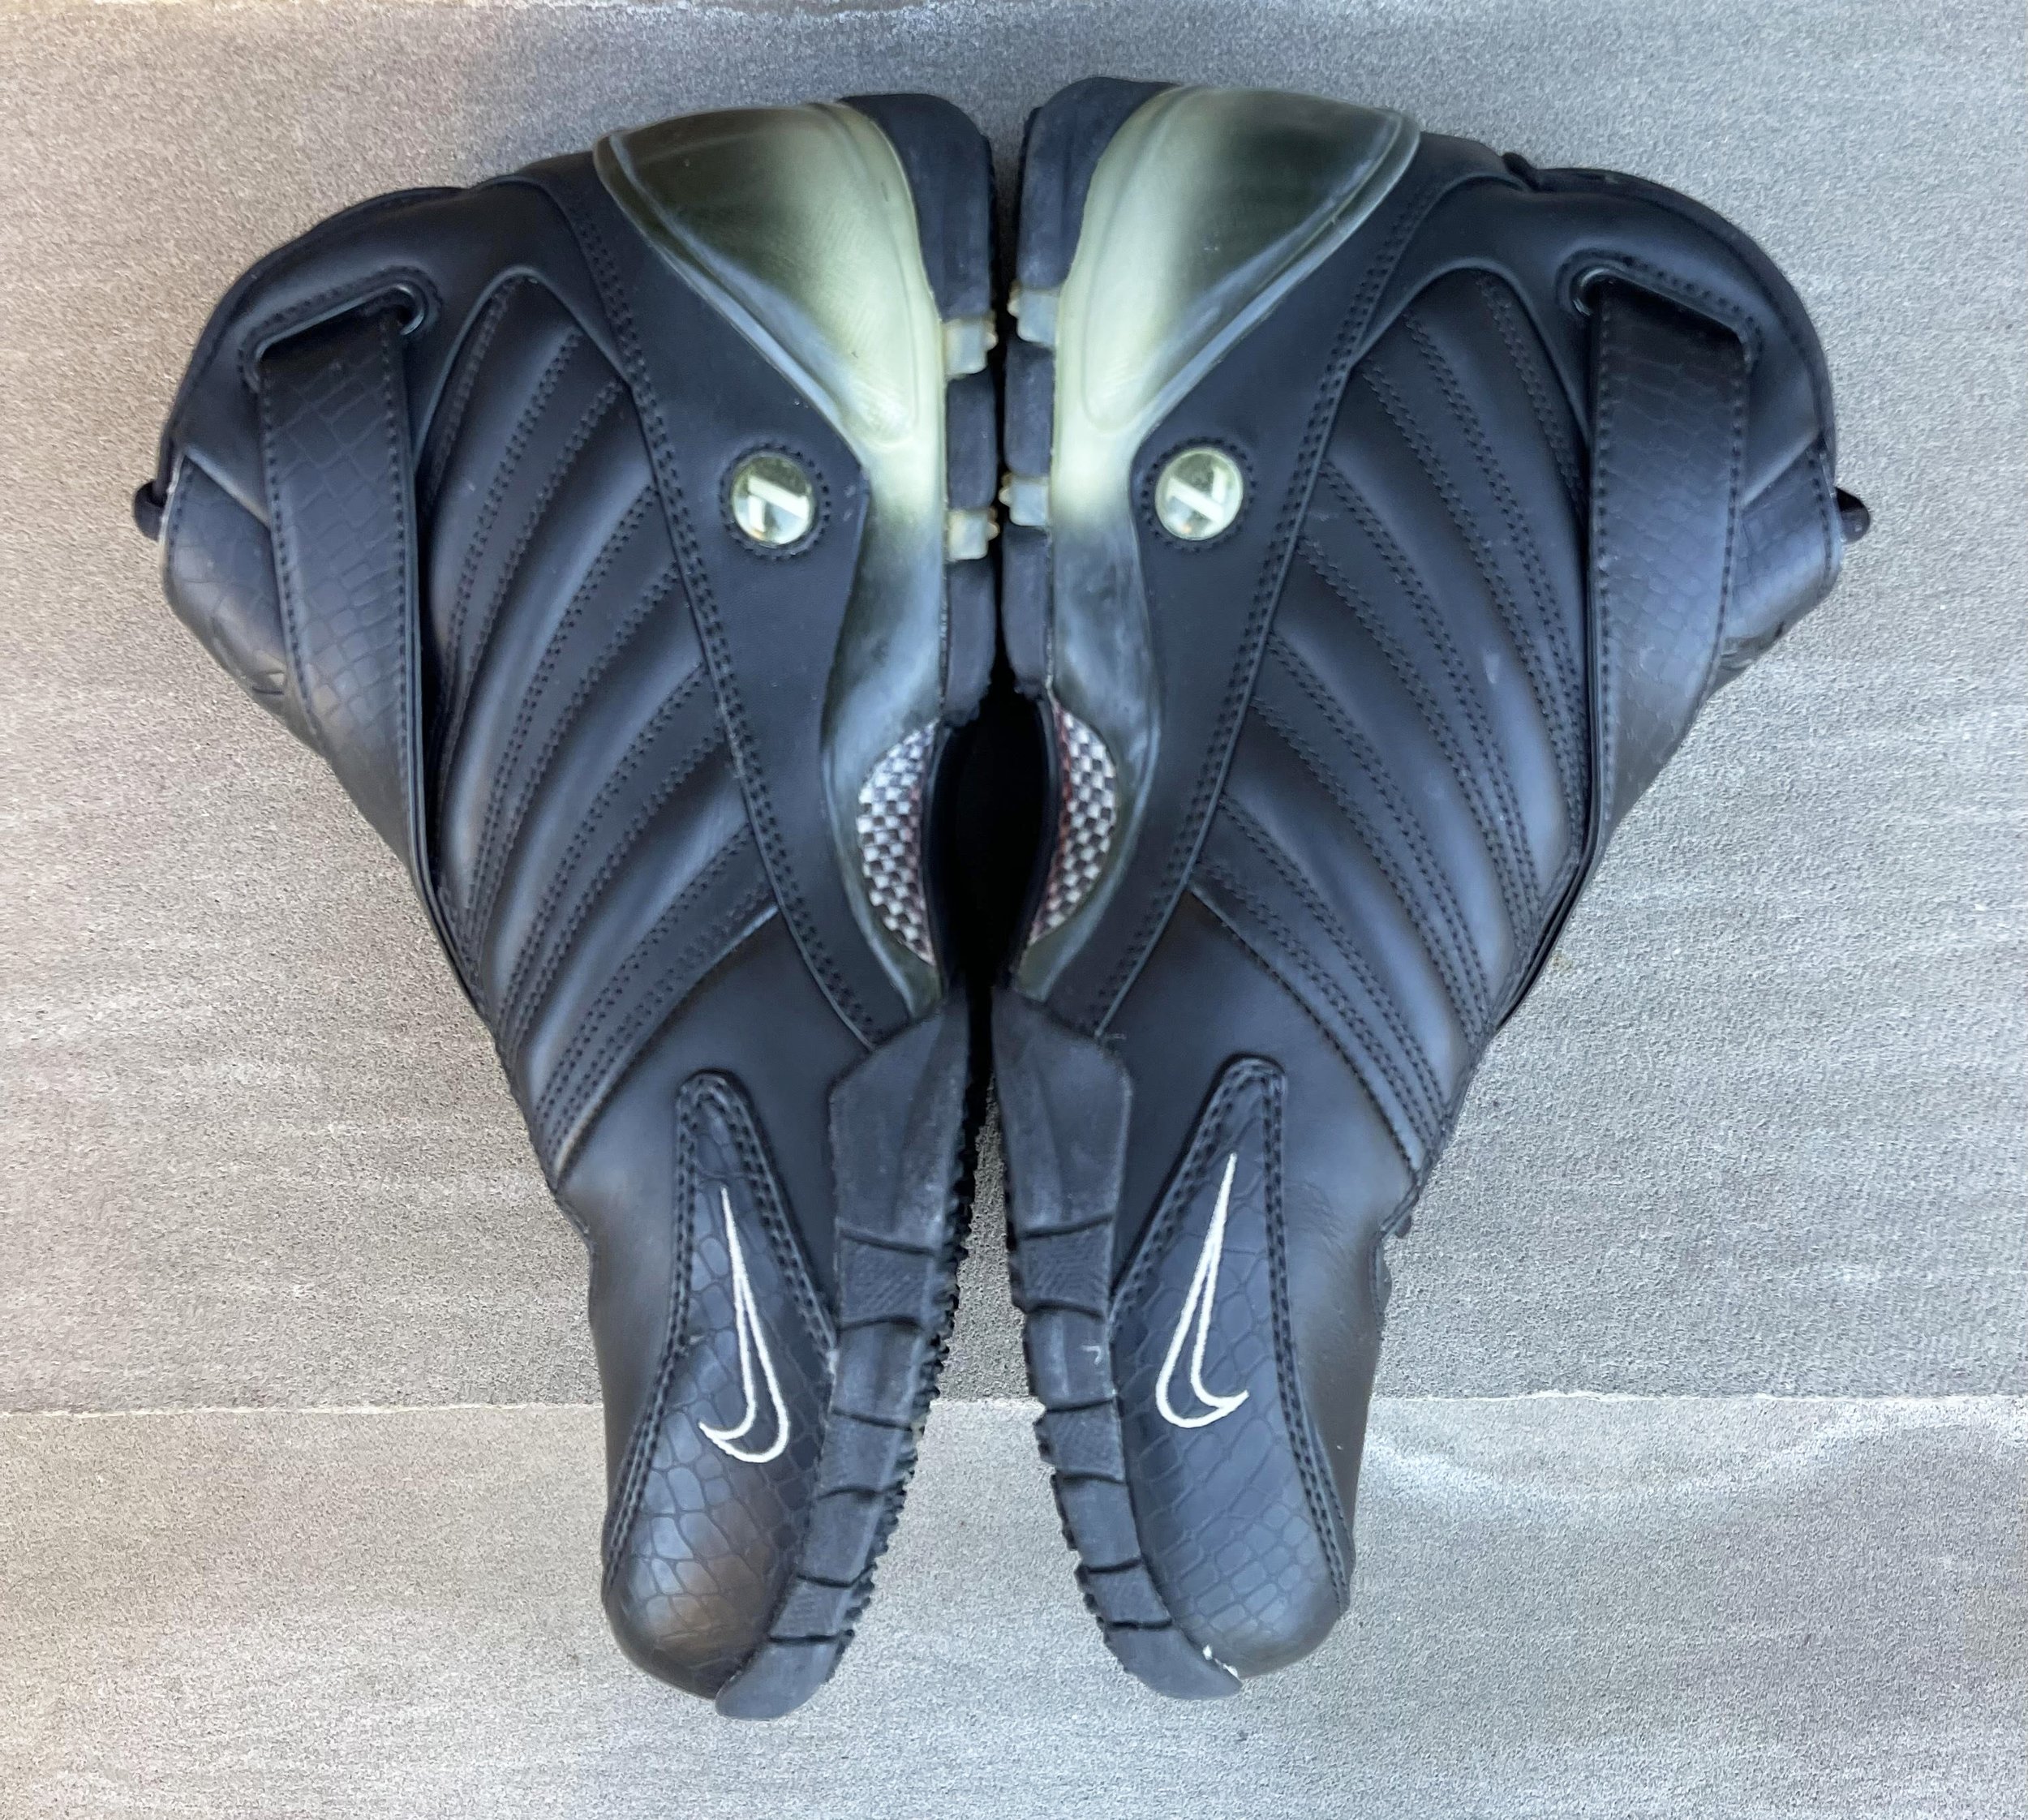 Nike Zoom Vick III Black / Metallic Silver (Size 9) DS — Roots